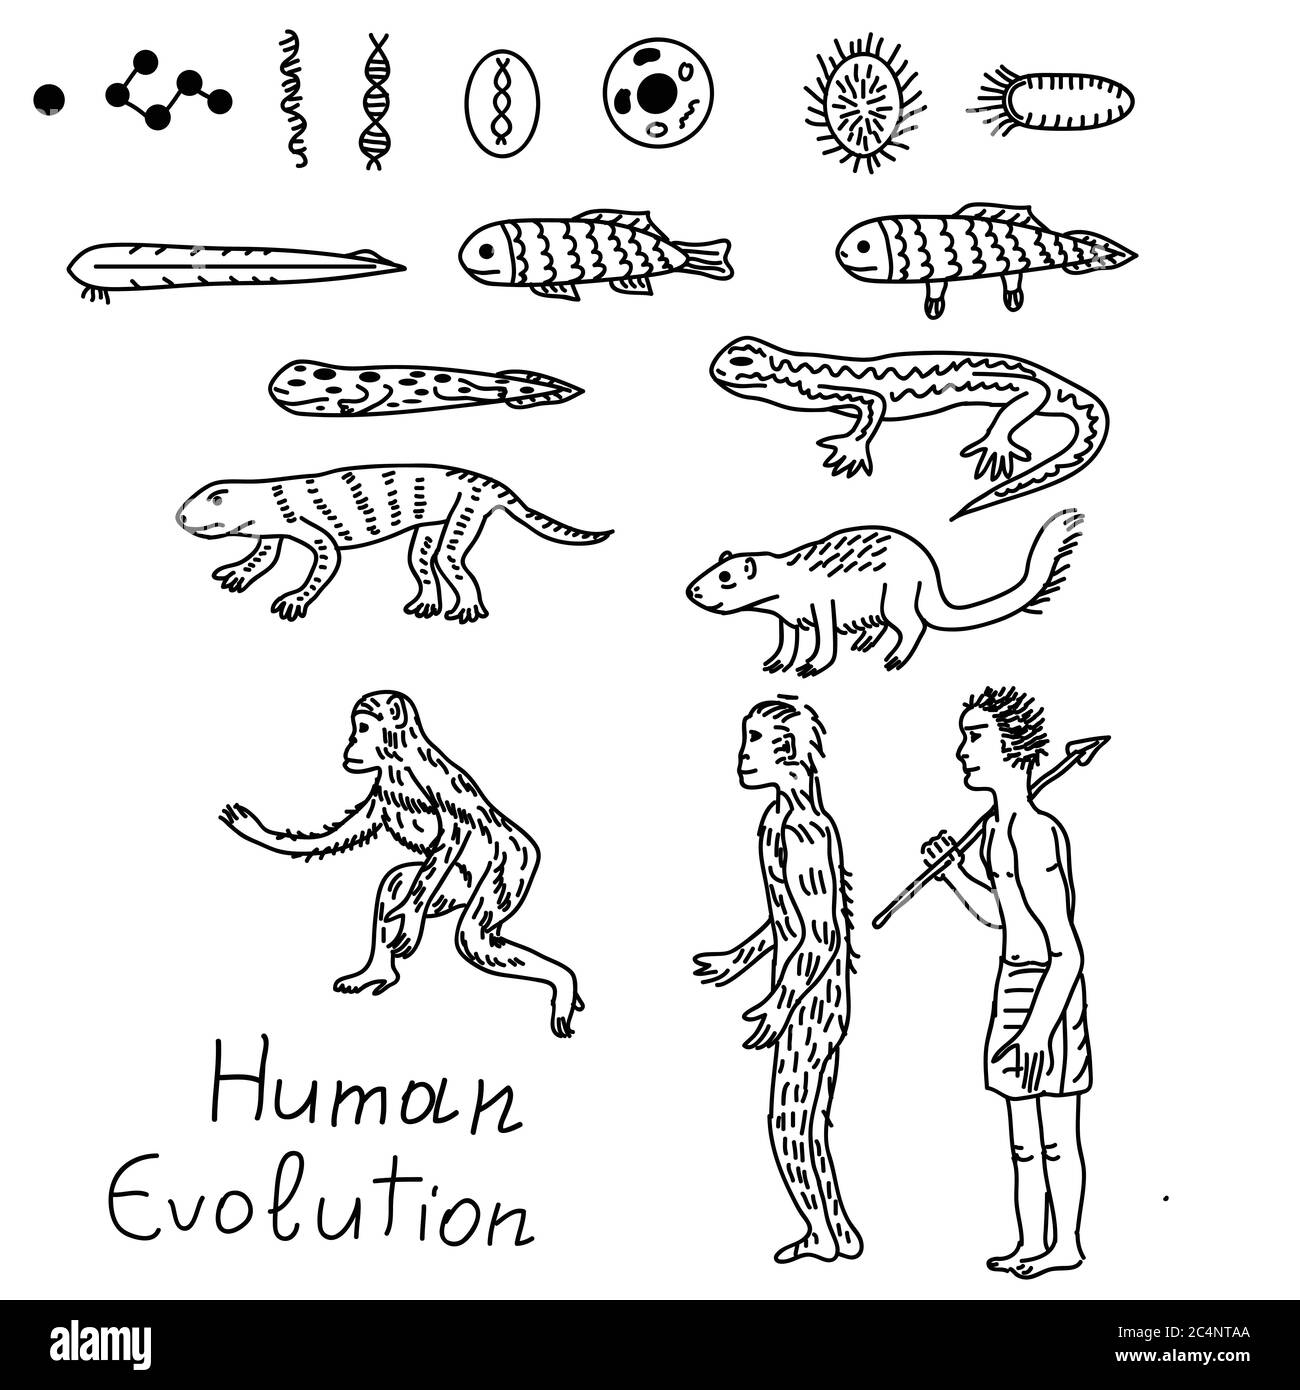 Evolution from atom to human illustration Stock Vector